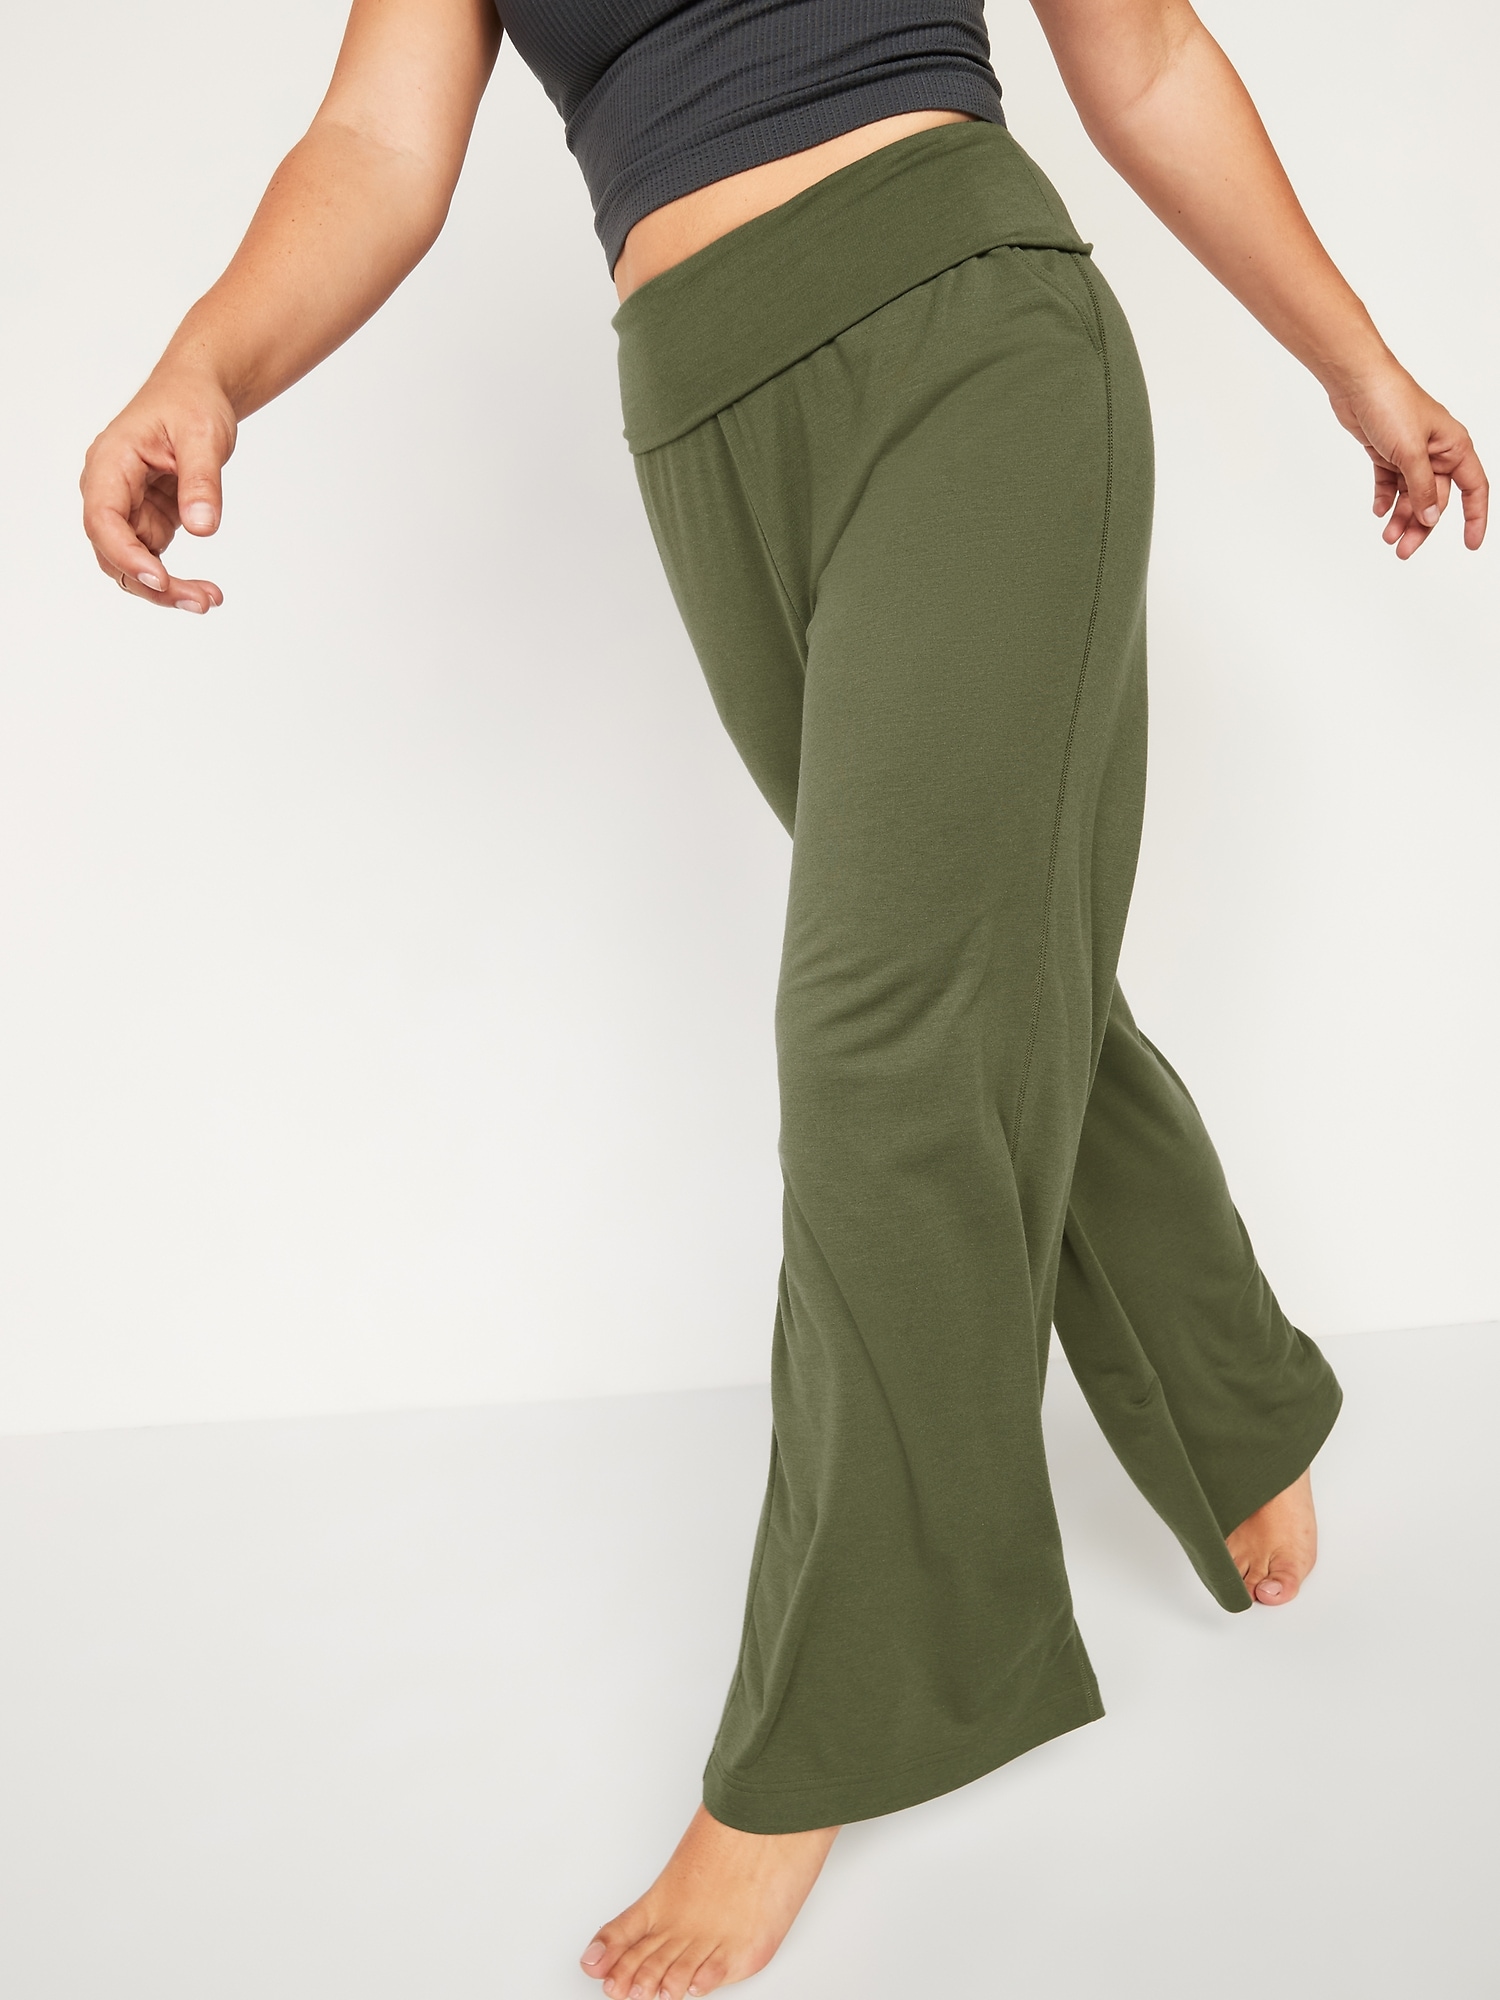 Foldover Yoga pants • Tise